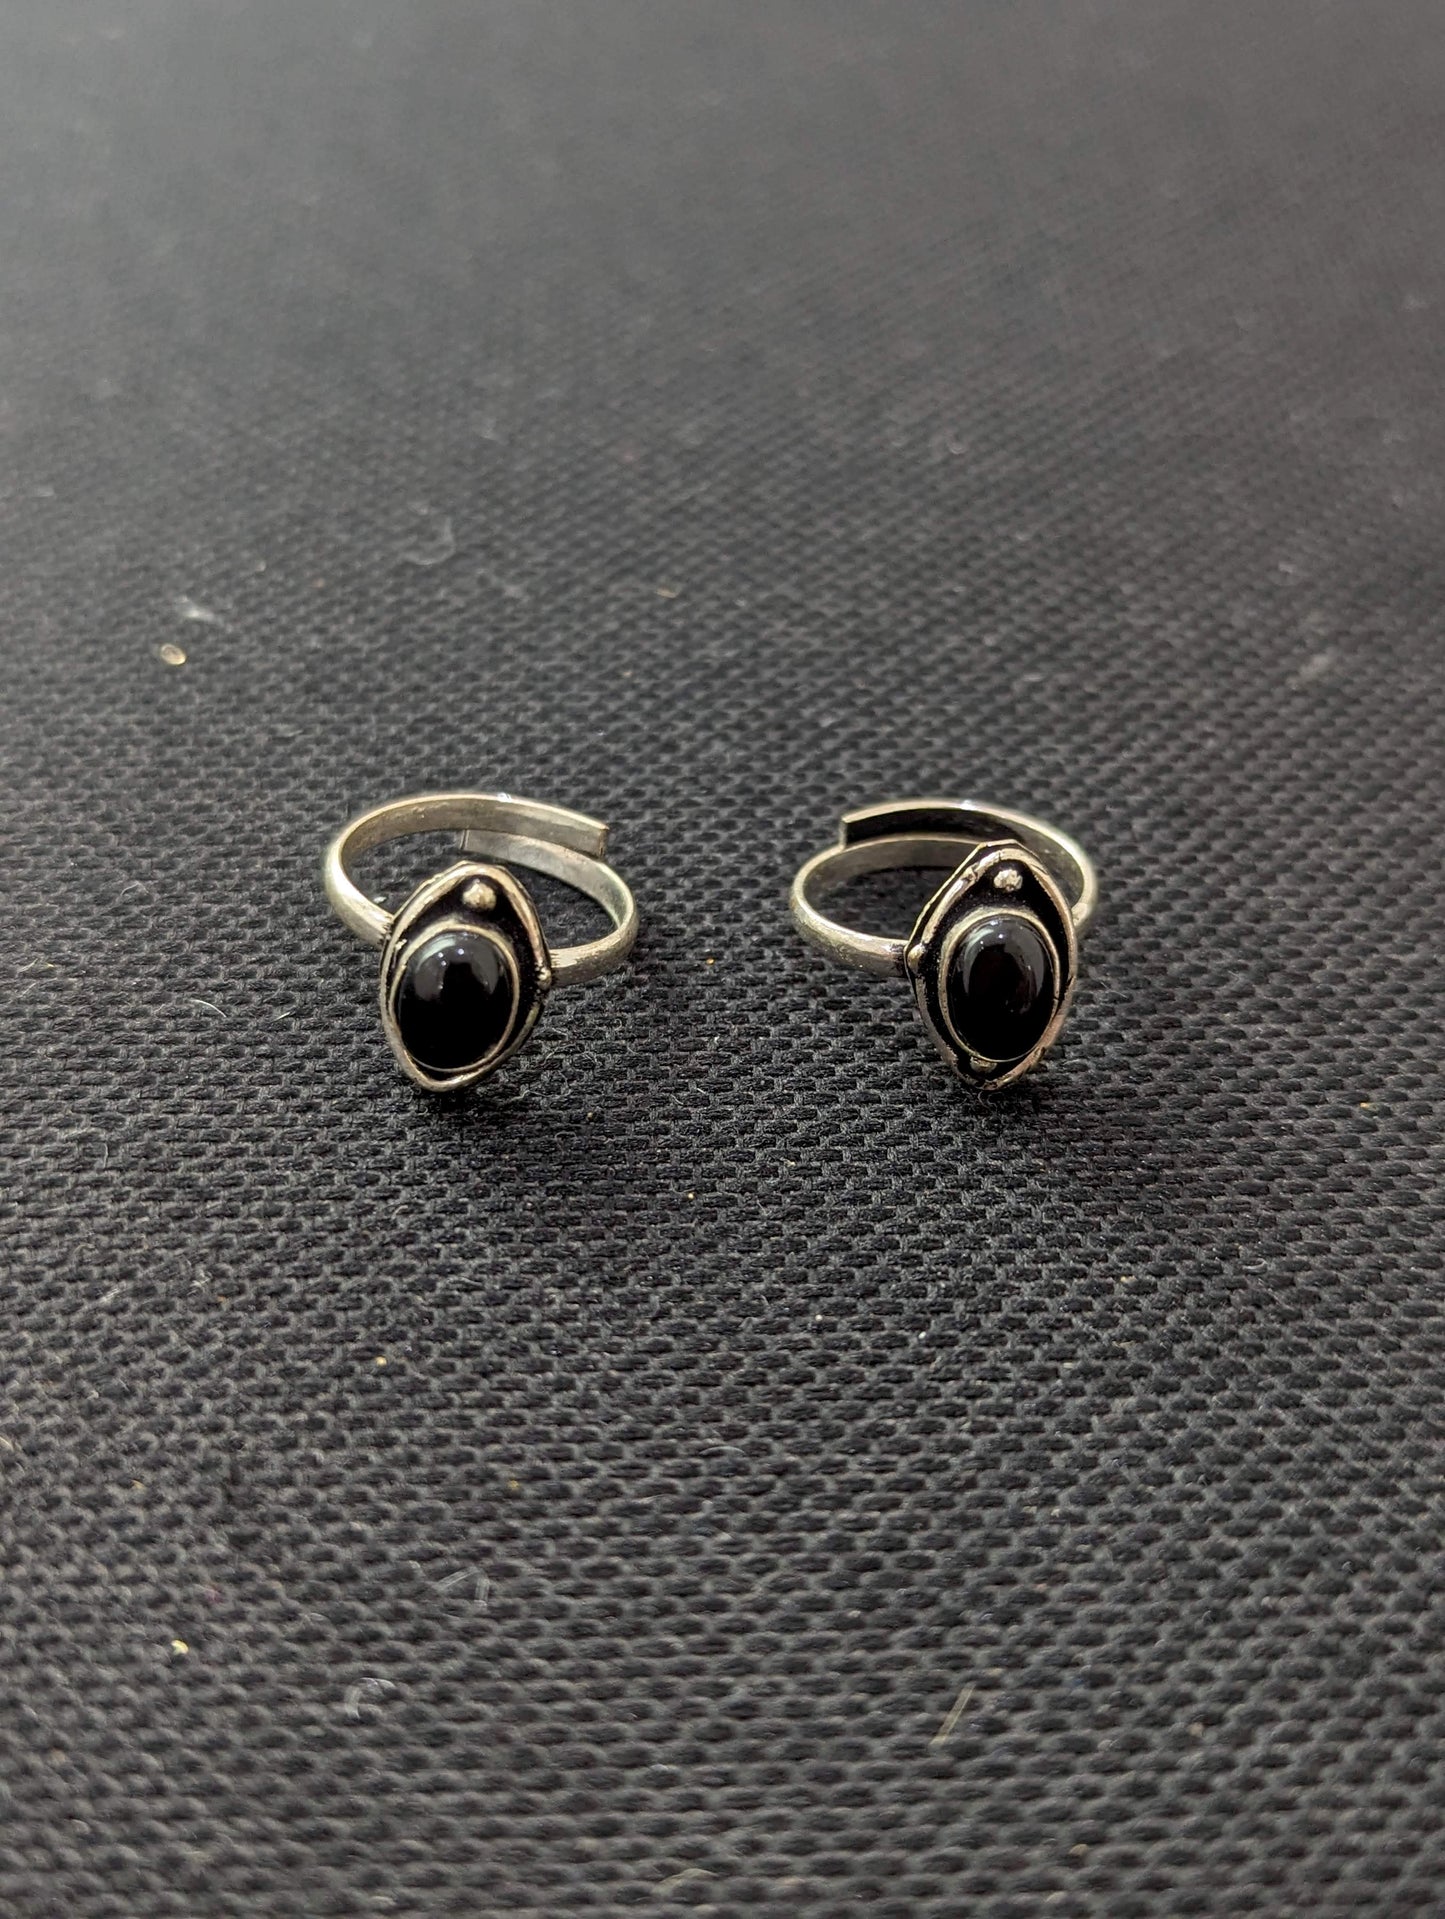 Oxidized silver adjustable Toe Rings - Simpliful